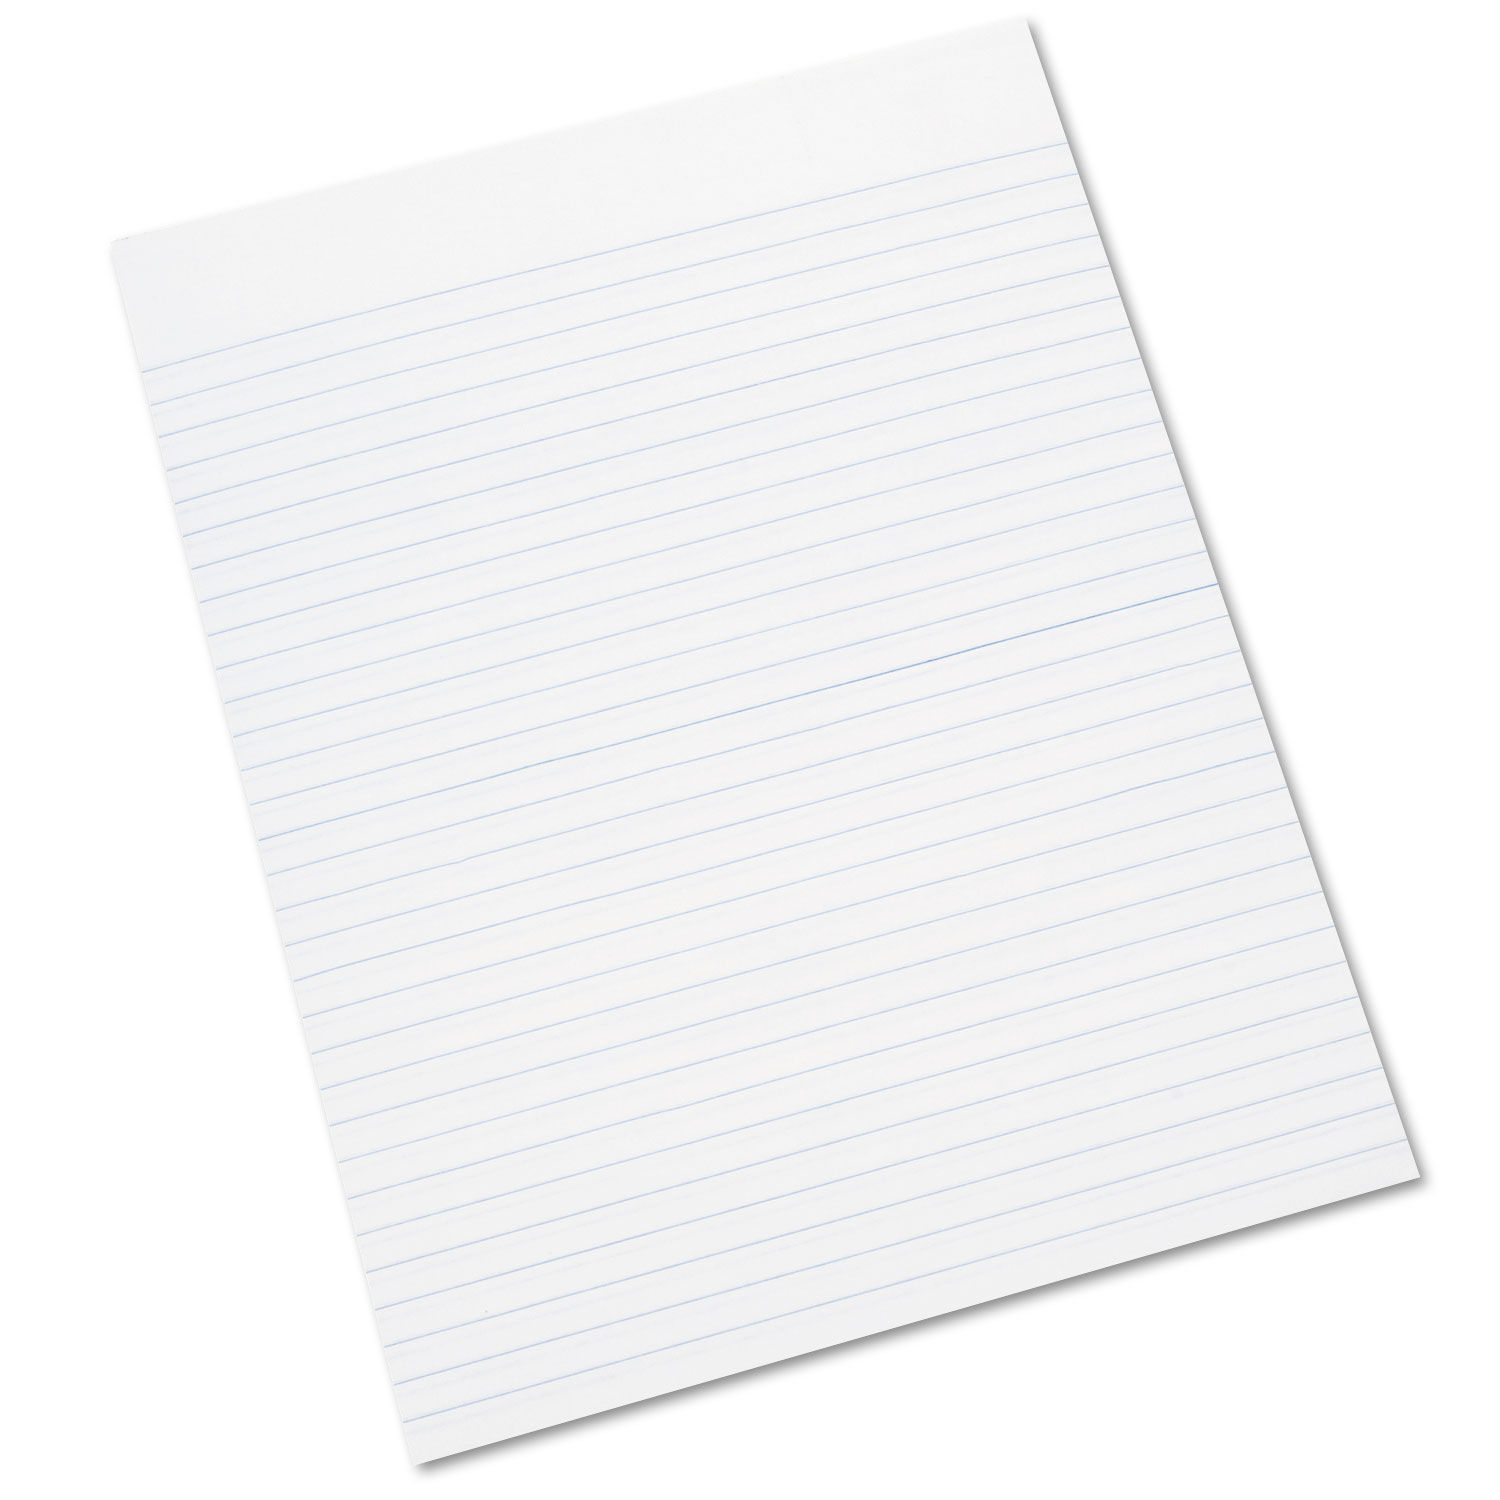 SKILCRAFT Writing Pad Wide/Legal Rule, 100 White 8.5 x 11 Sheets, Dozen, GSA 753001124566